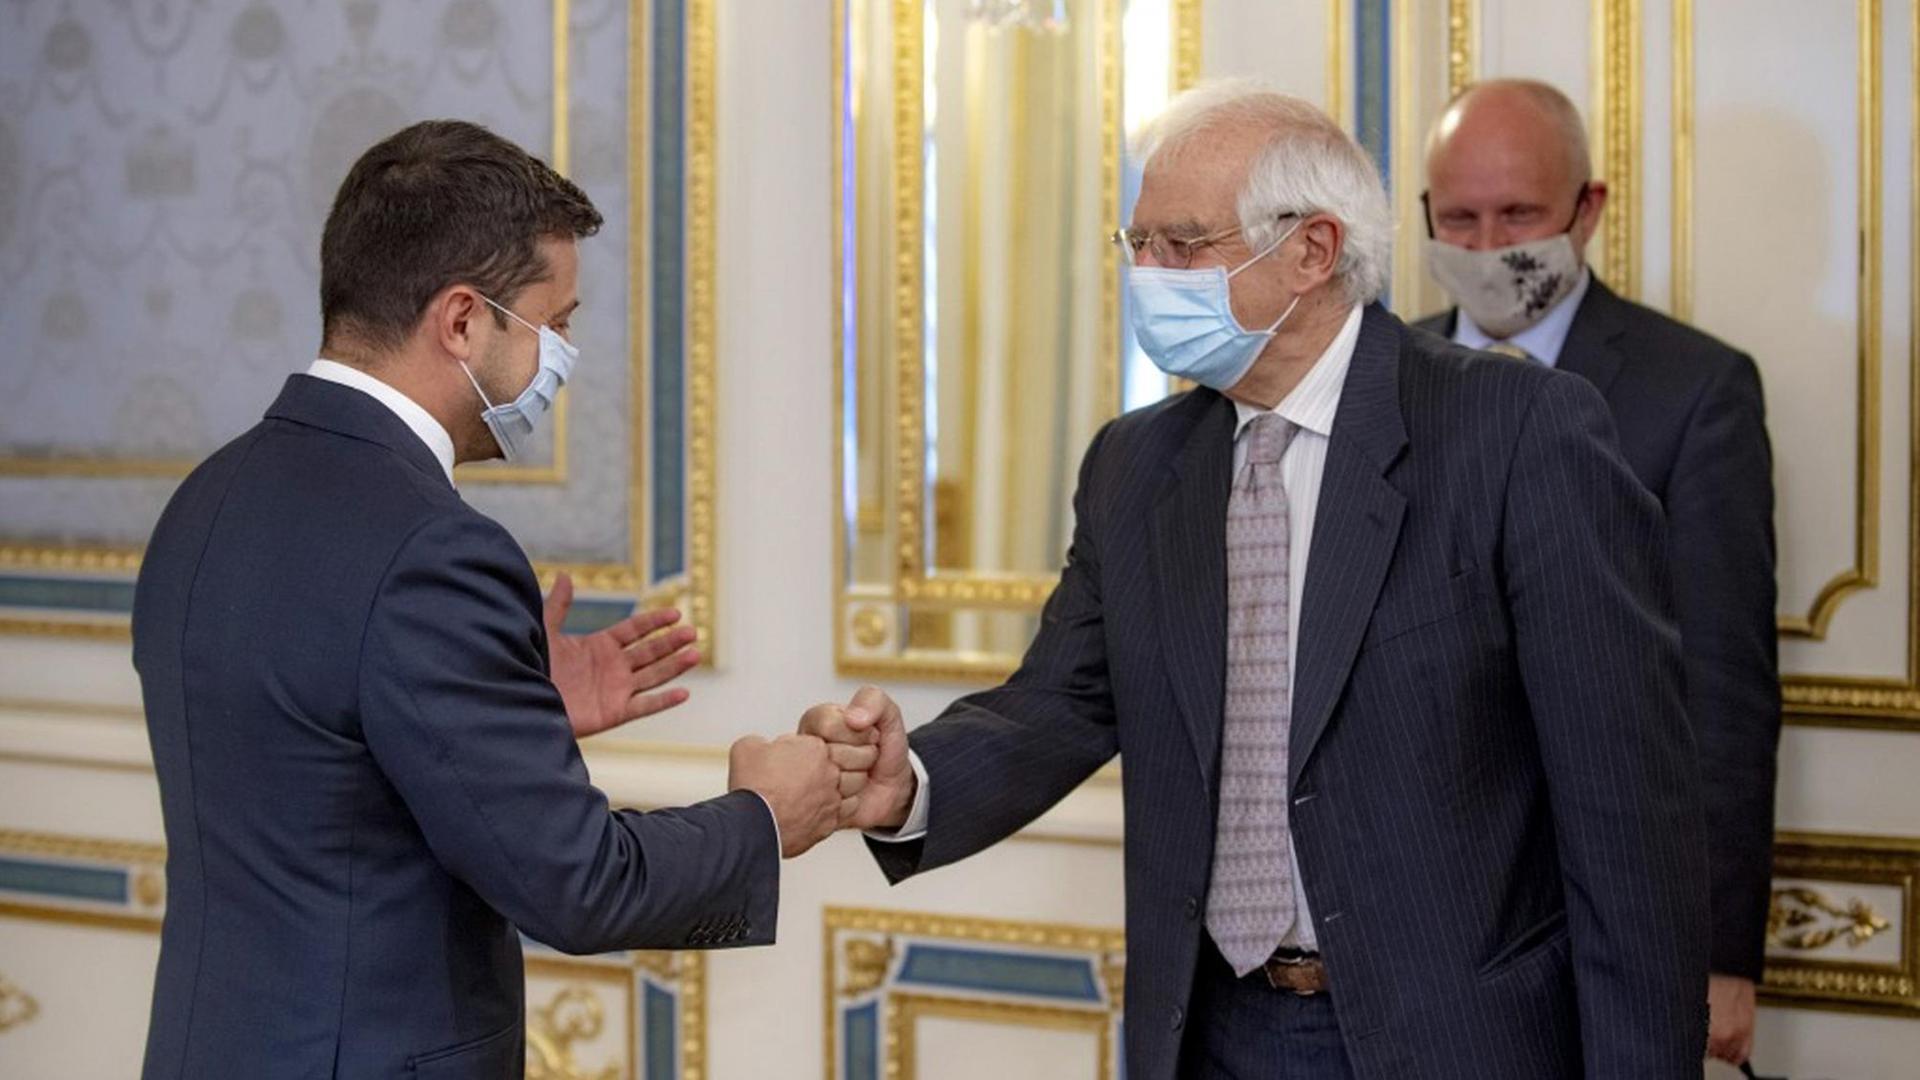 September 22, 2020: Der ukrainische Präsident Volodymyr SelenskyJ (L) begrüßt den Chefdiplomat der Europäischen Union, Josep Borrell, vor den Gesprächen in Kiew.